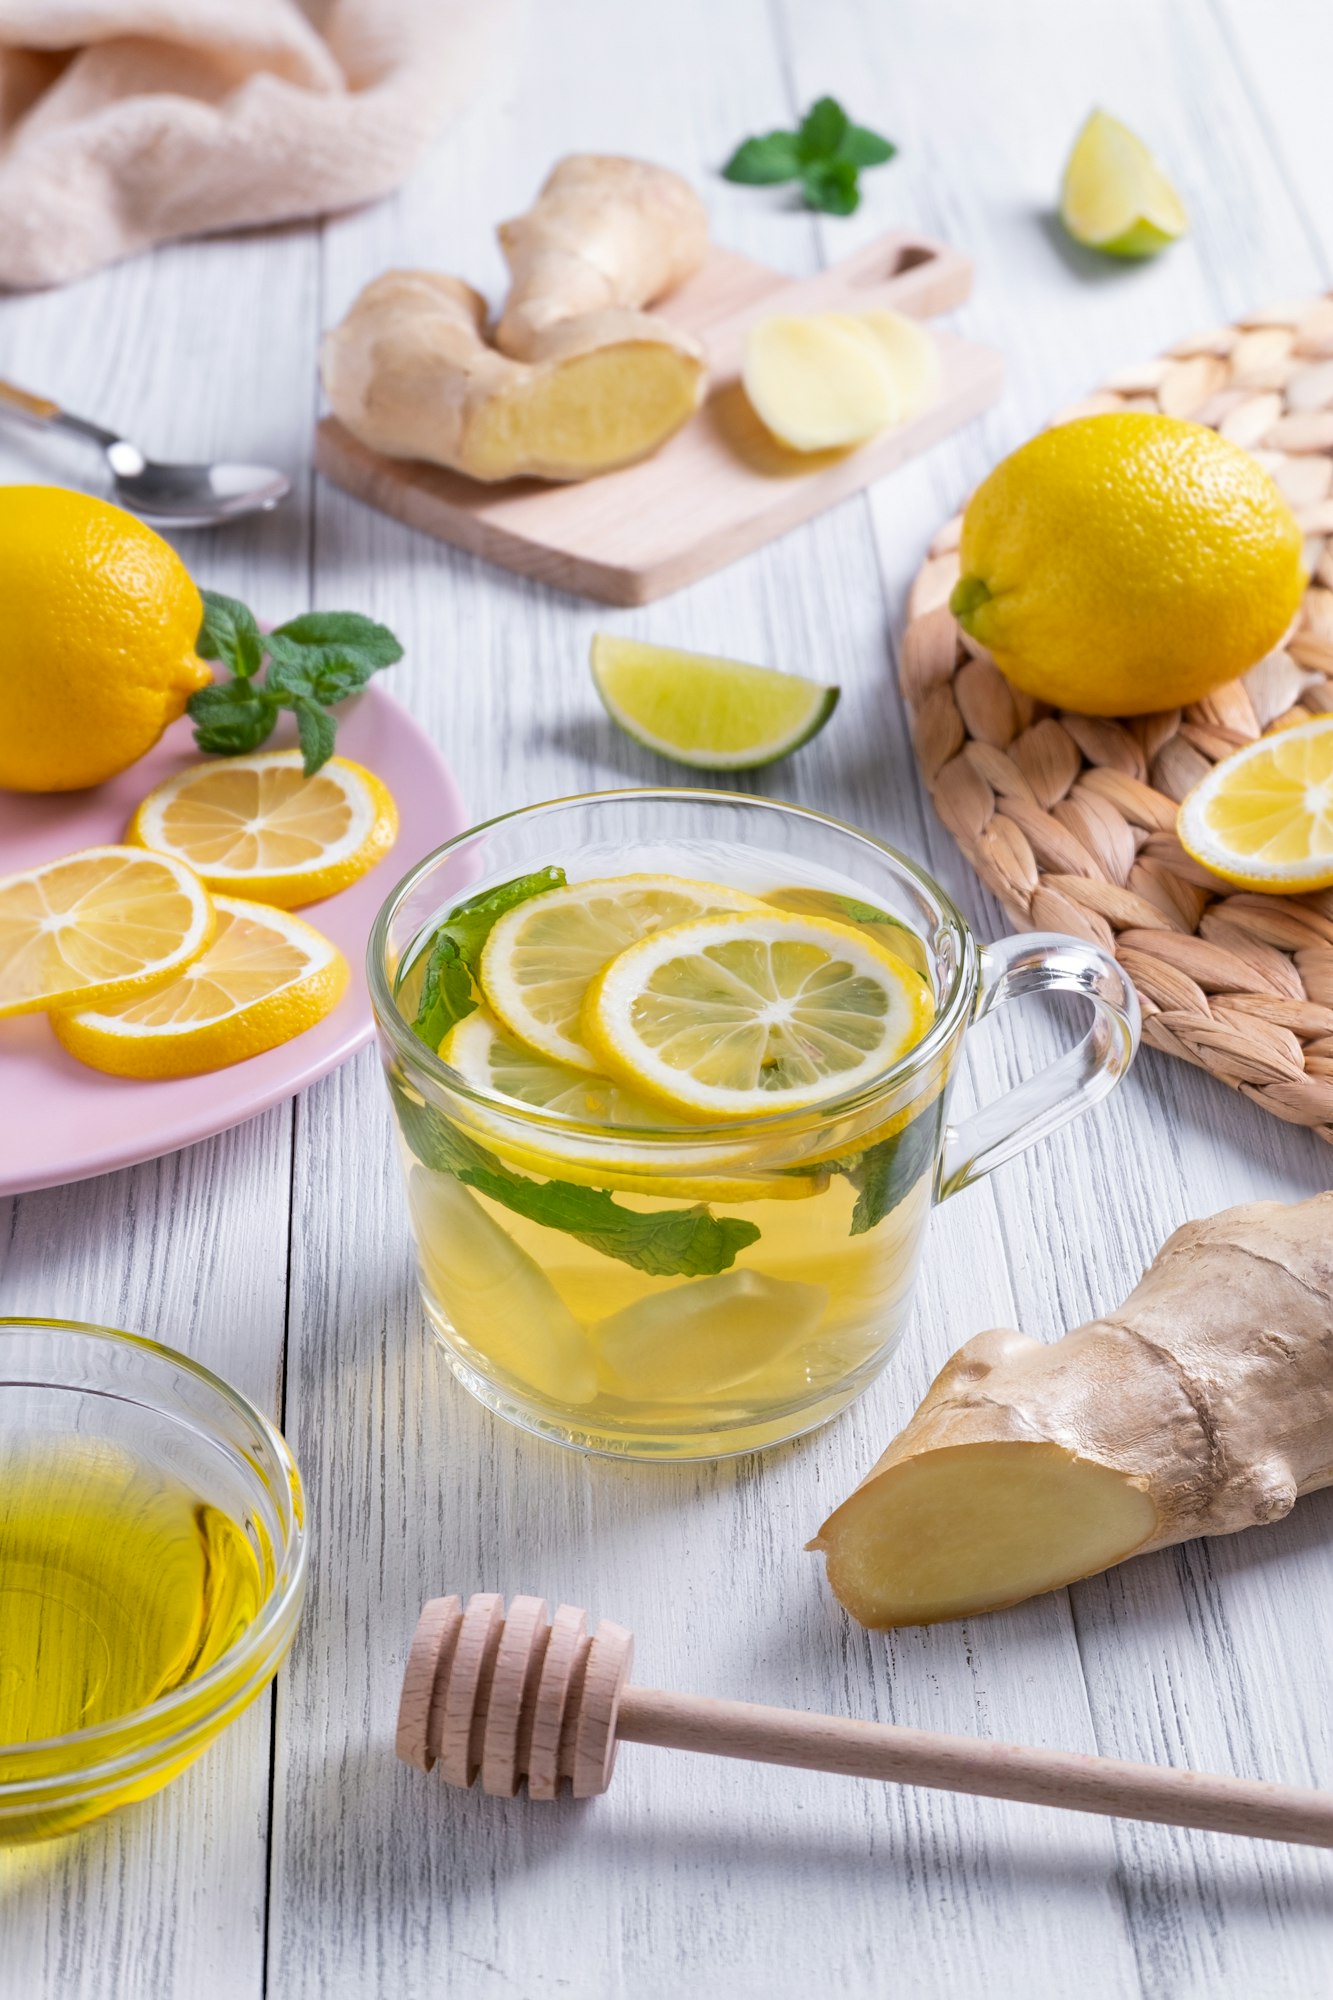 Green tea with lemon